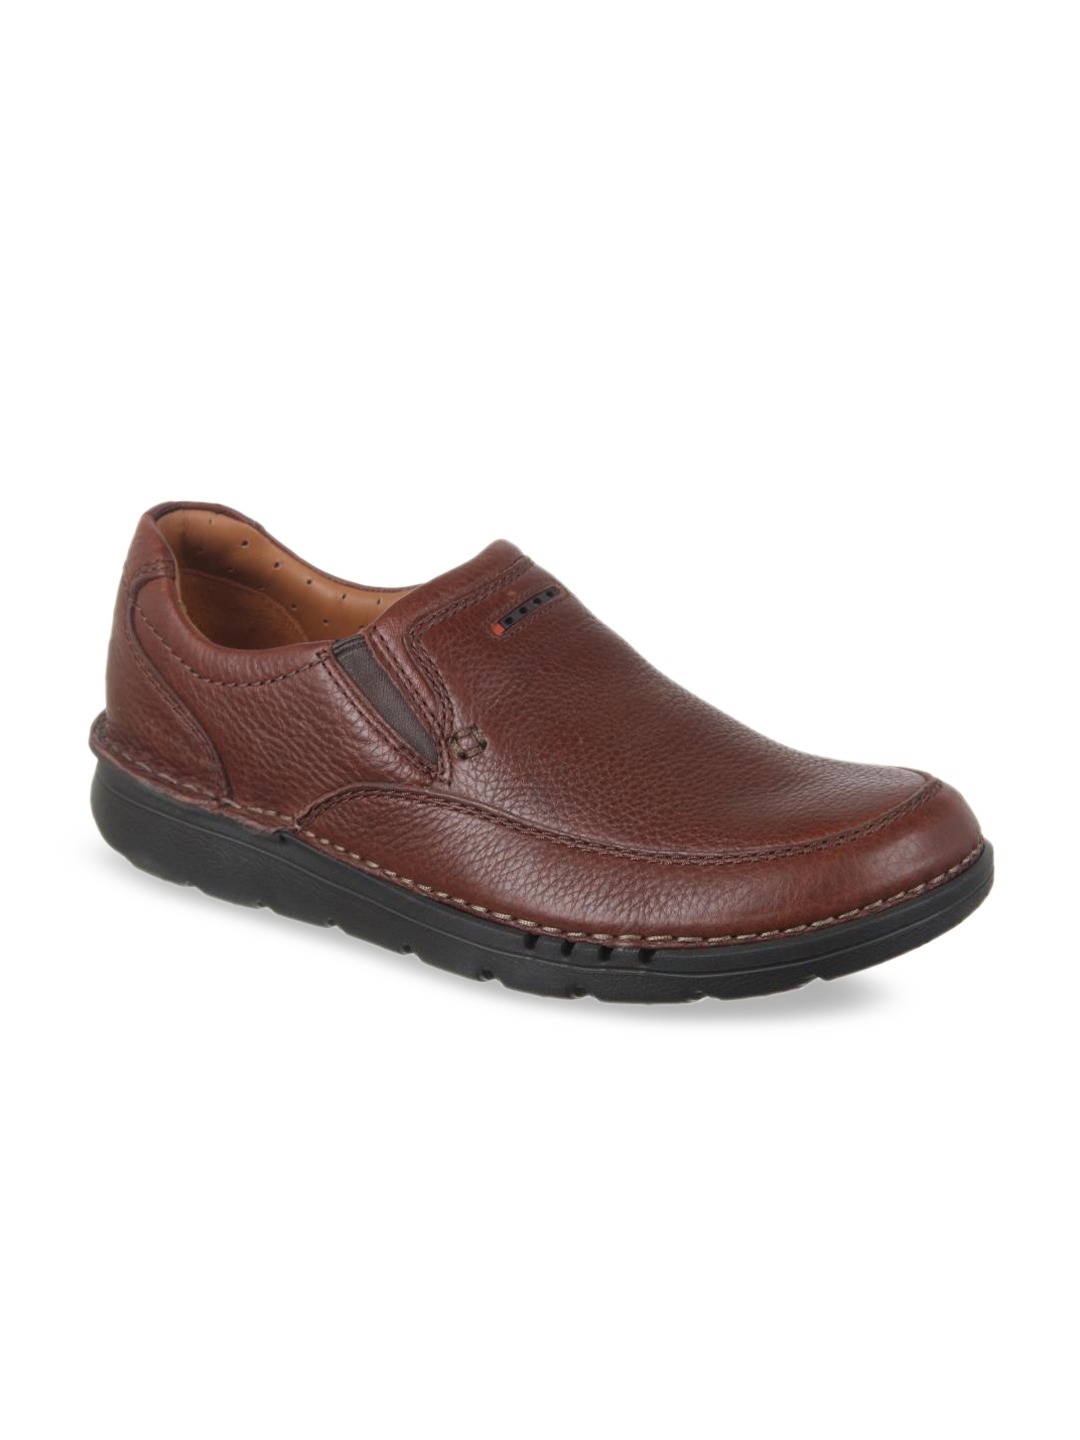 Buy Clarks Men Brown Slip On Sneakers - Casual Shoes for Men 9802509 ...